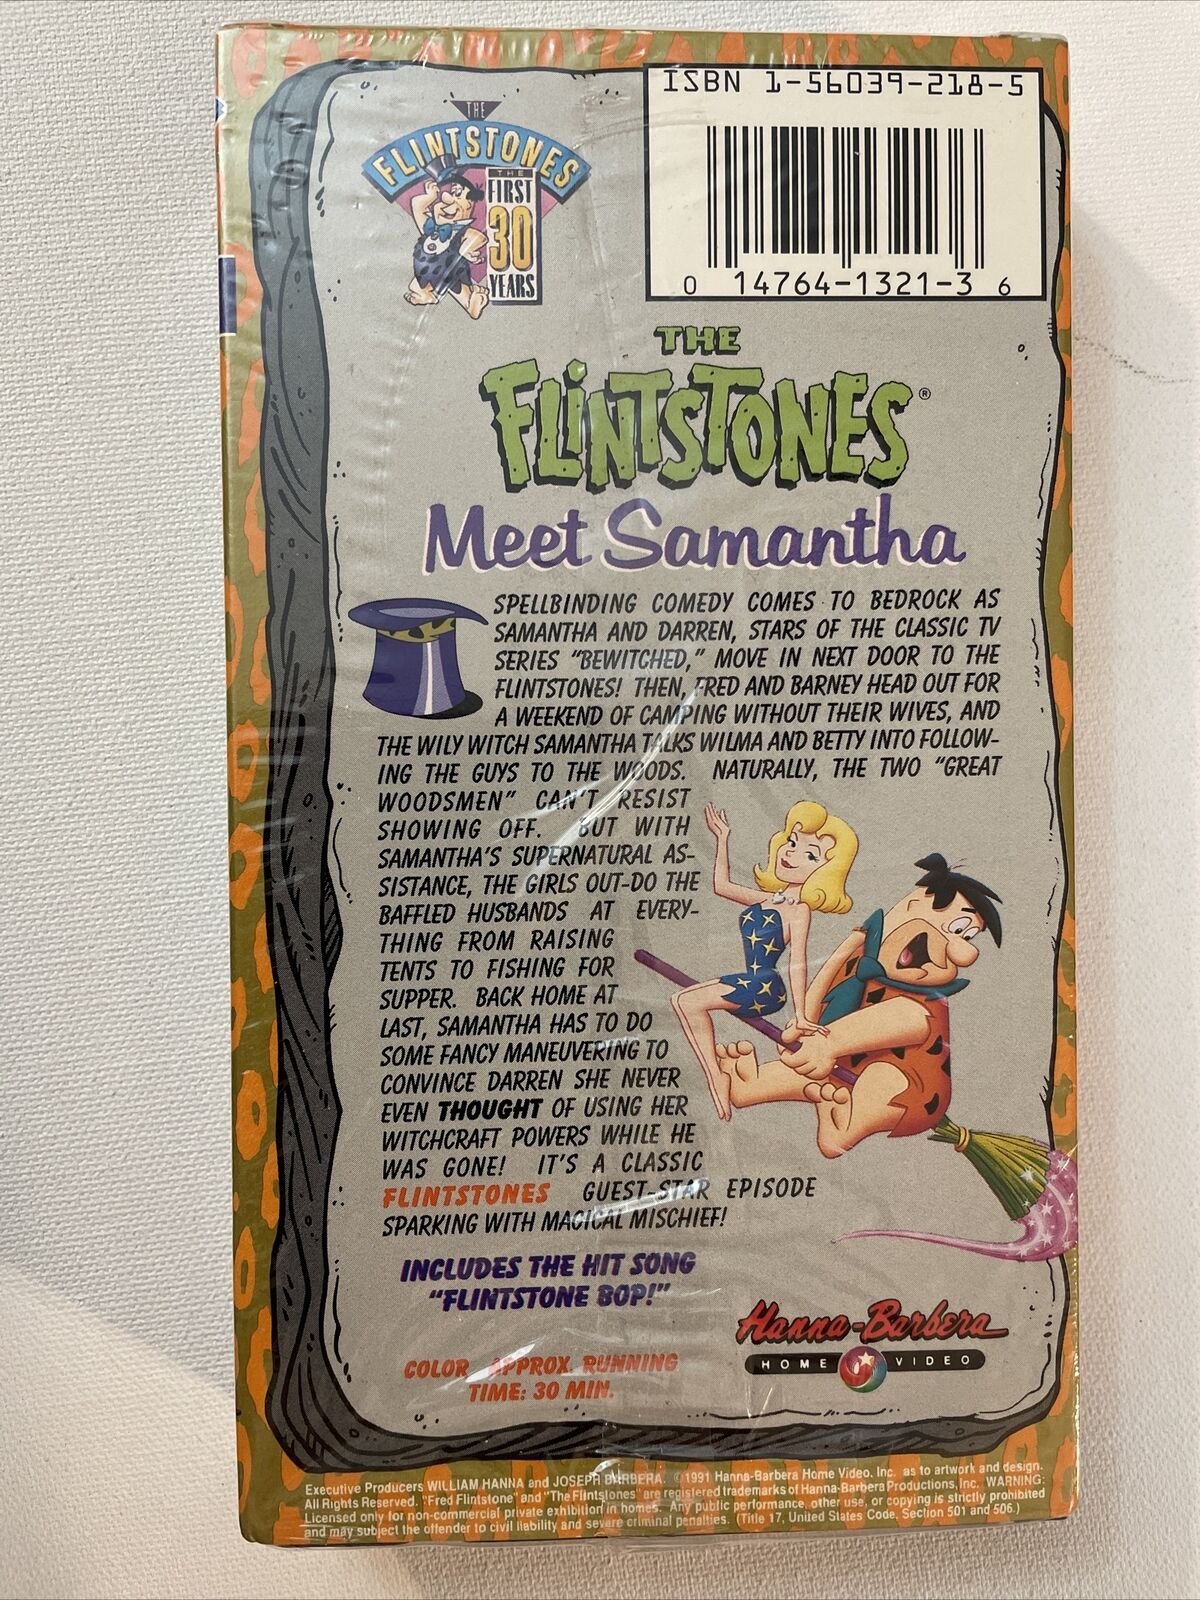 Brand New Anniversary Collection The Flintstones Meet Samantha Vhs 1991